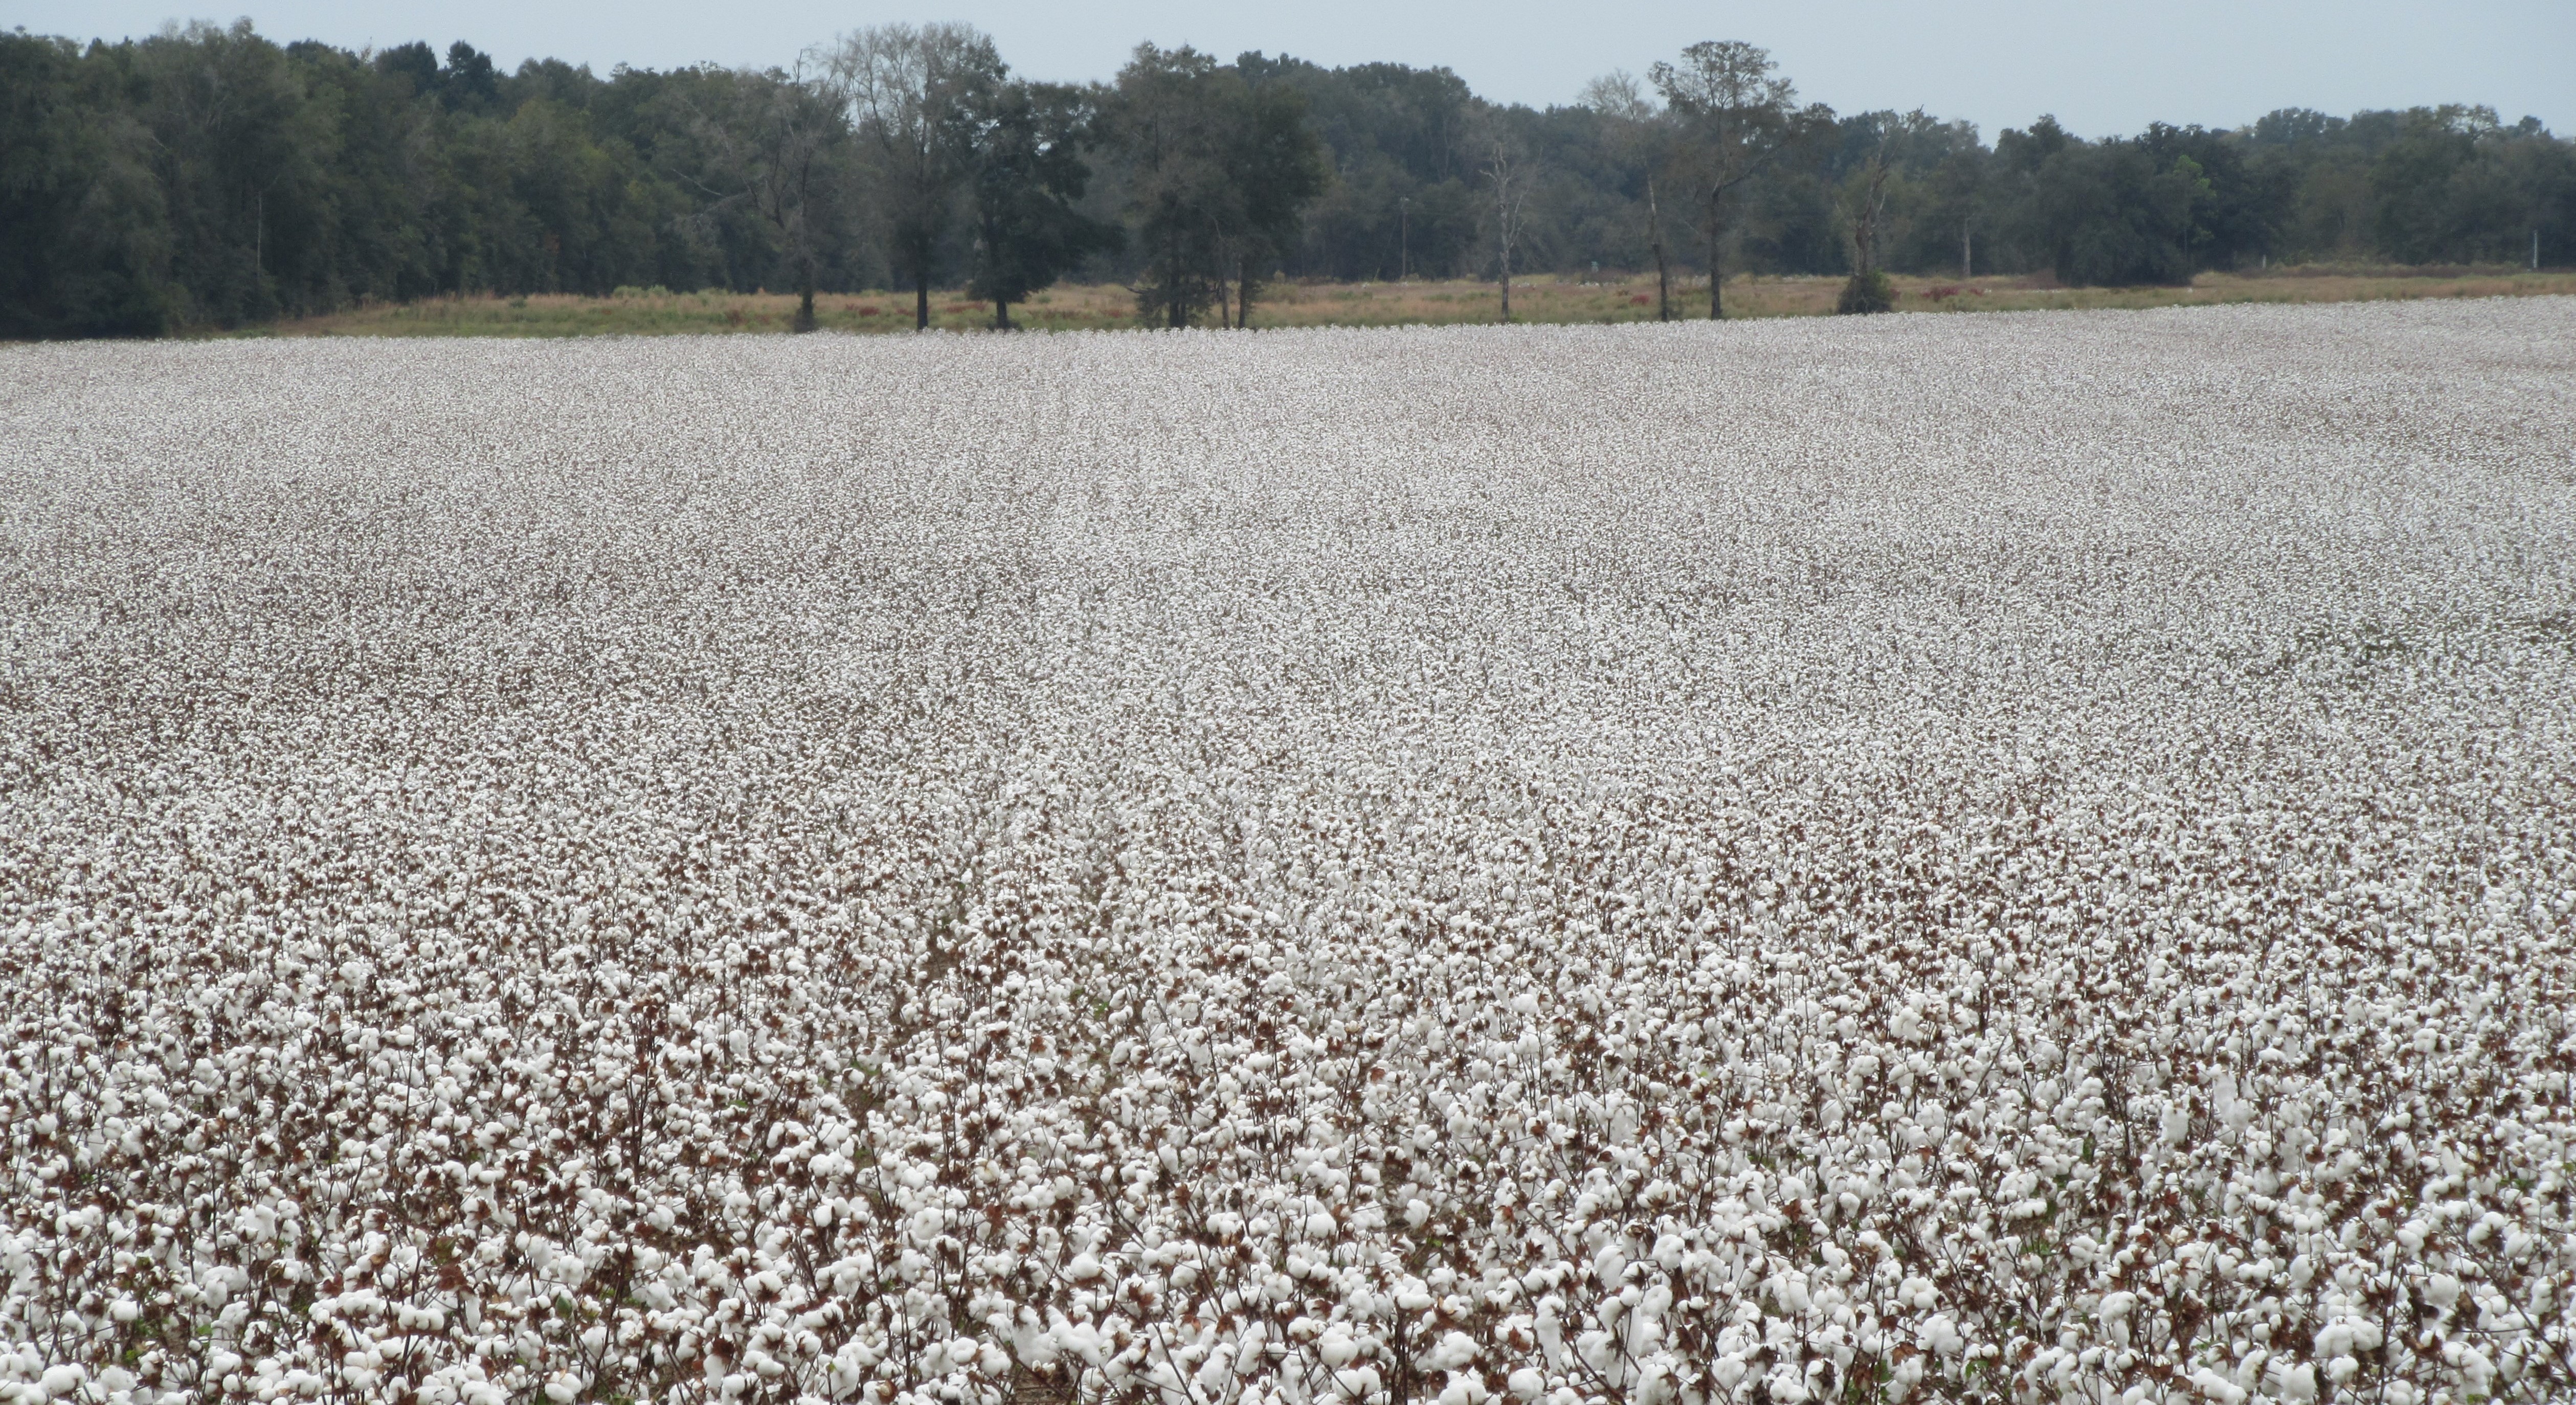 Application of Cotton Defoliation Aids in Alabama - Alabama